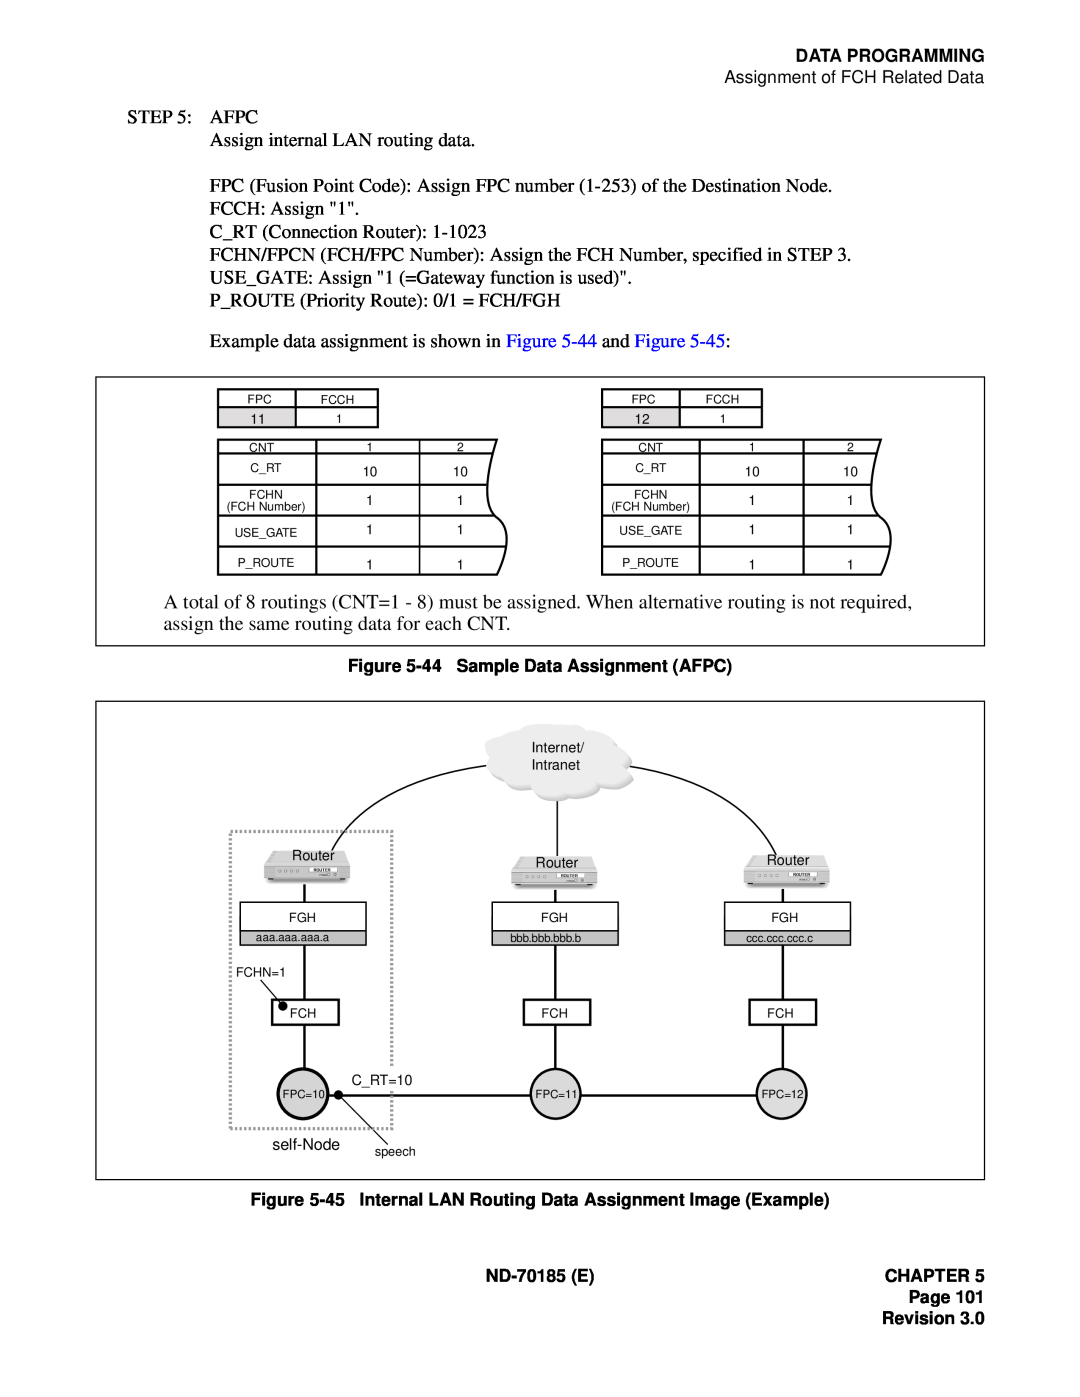 NEC NEAX2400 system manual AFPC Assign internal LAN routing data 